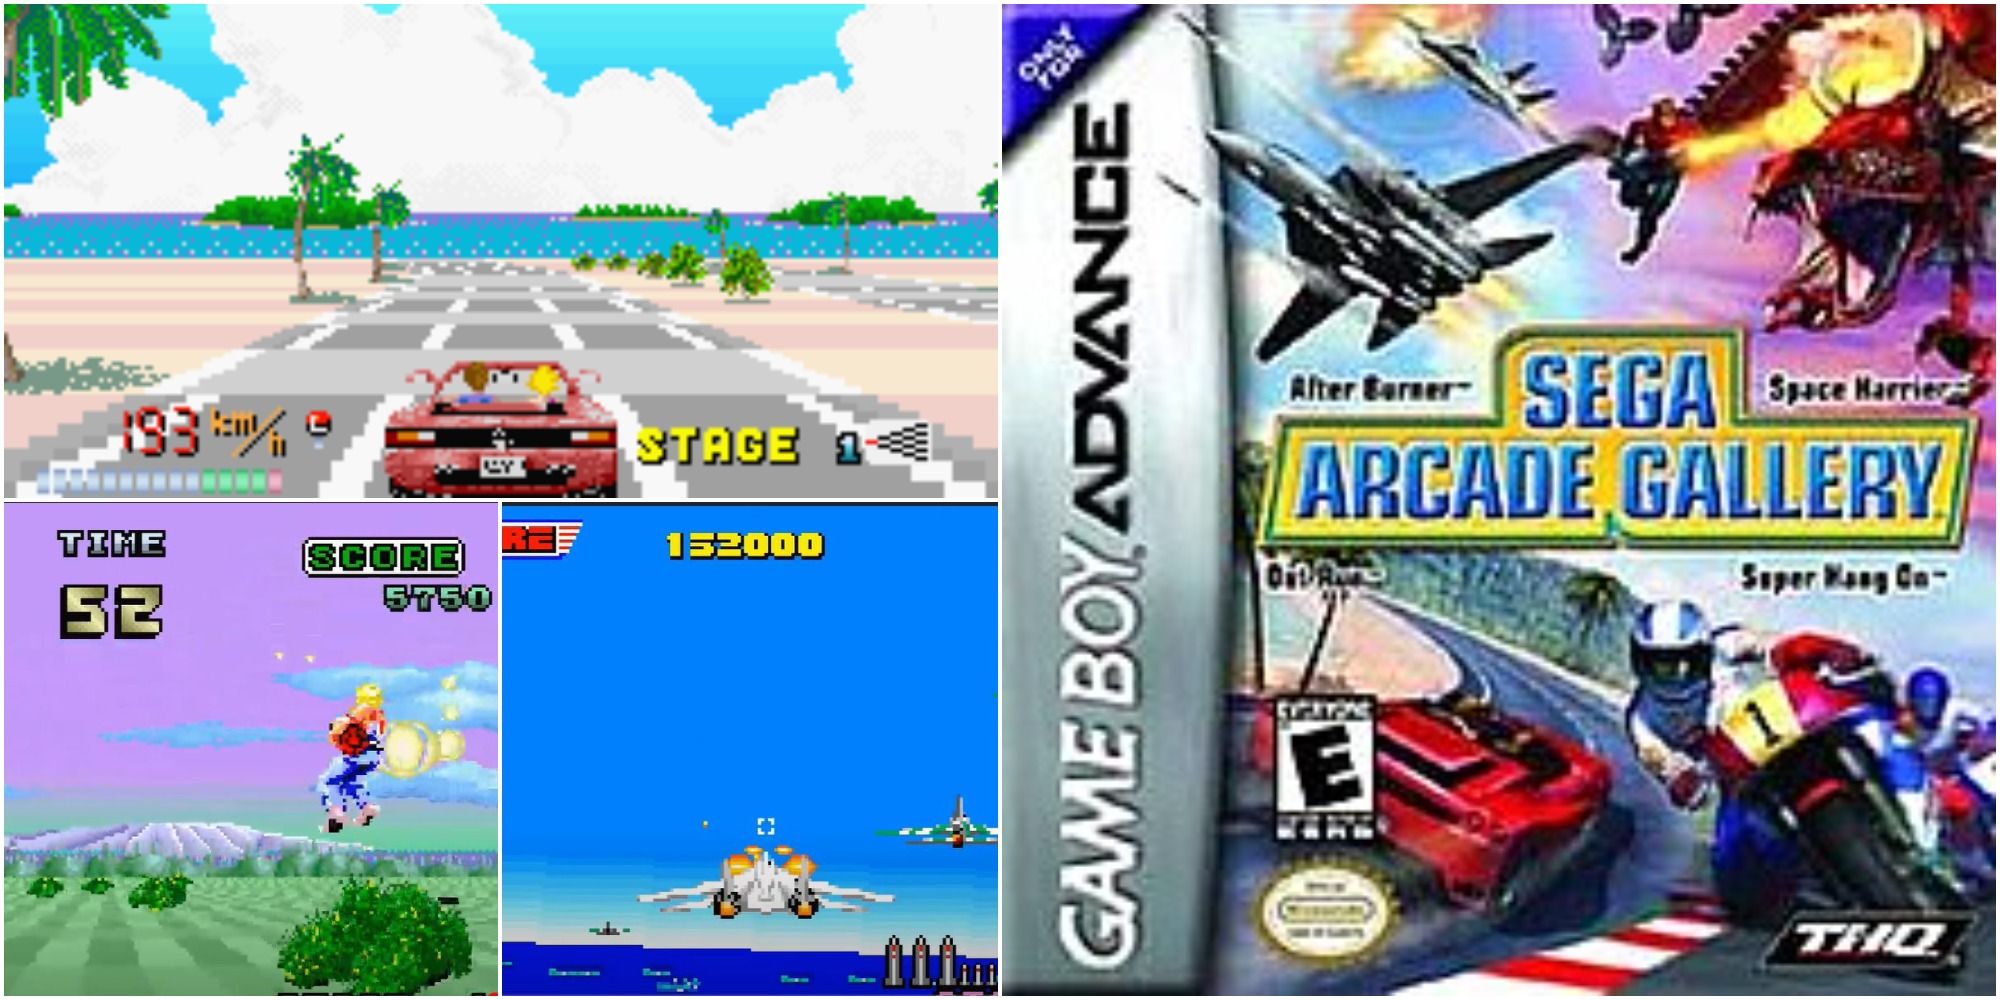 Sega Arcade Gallery Game Boy Advance